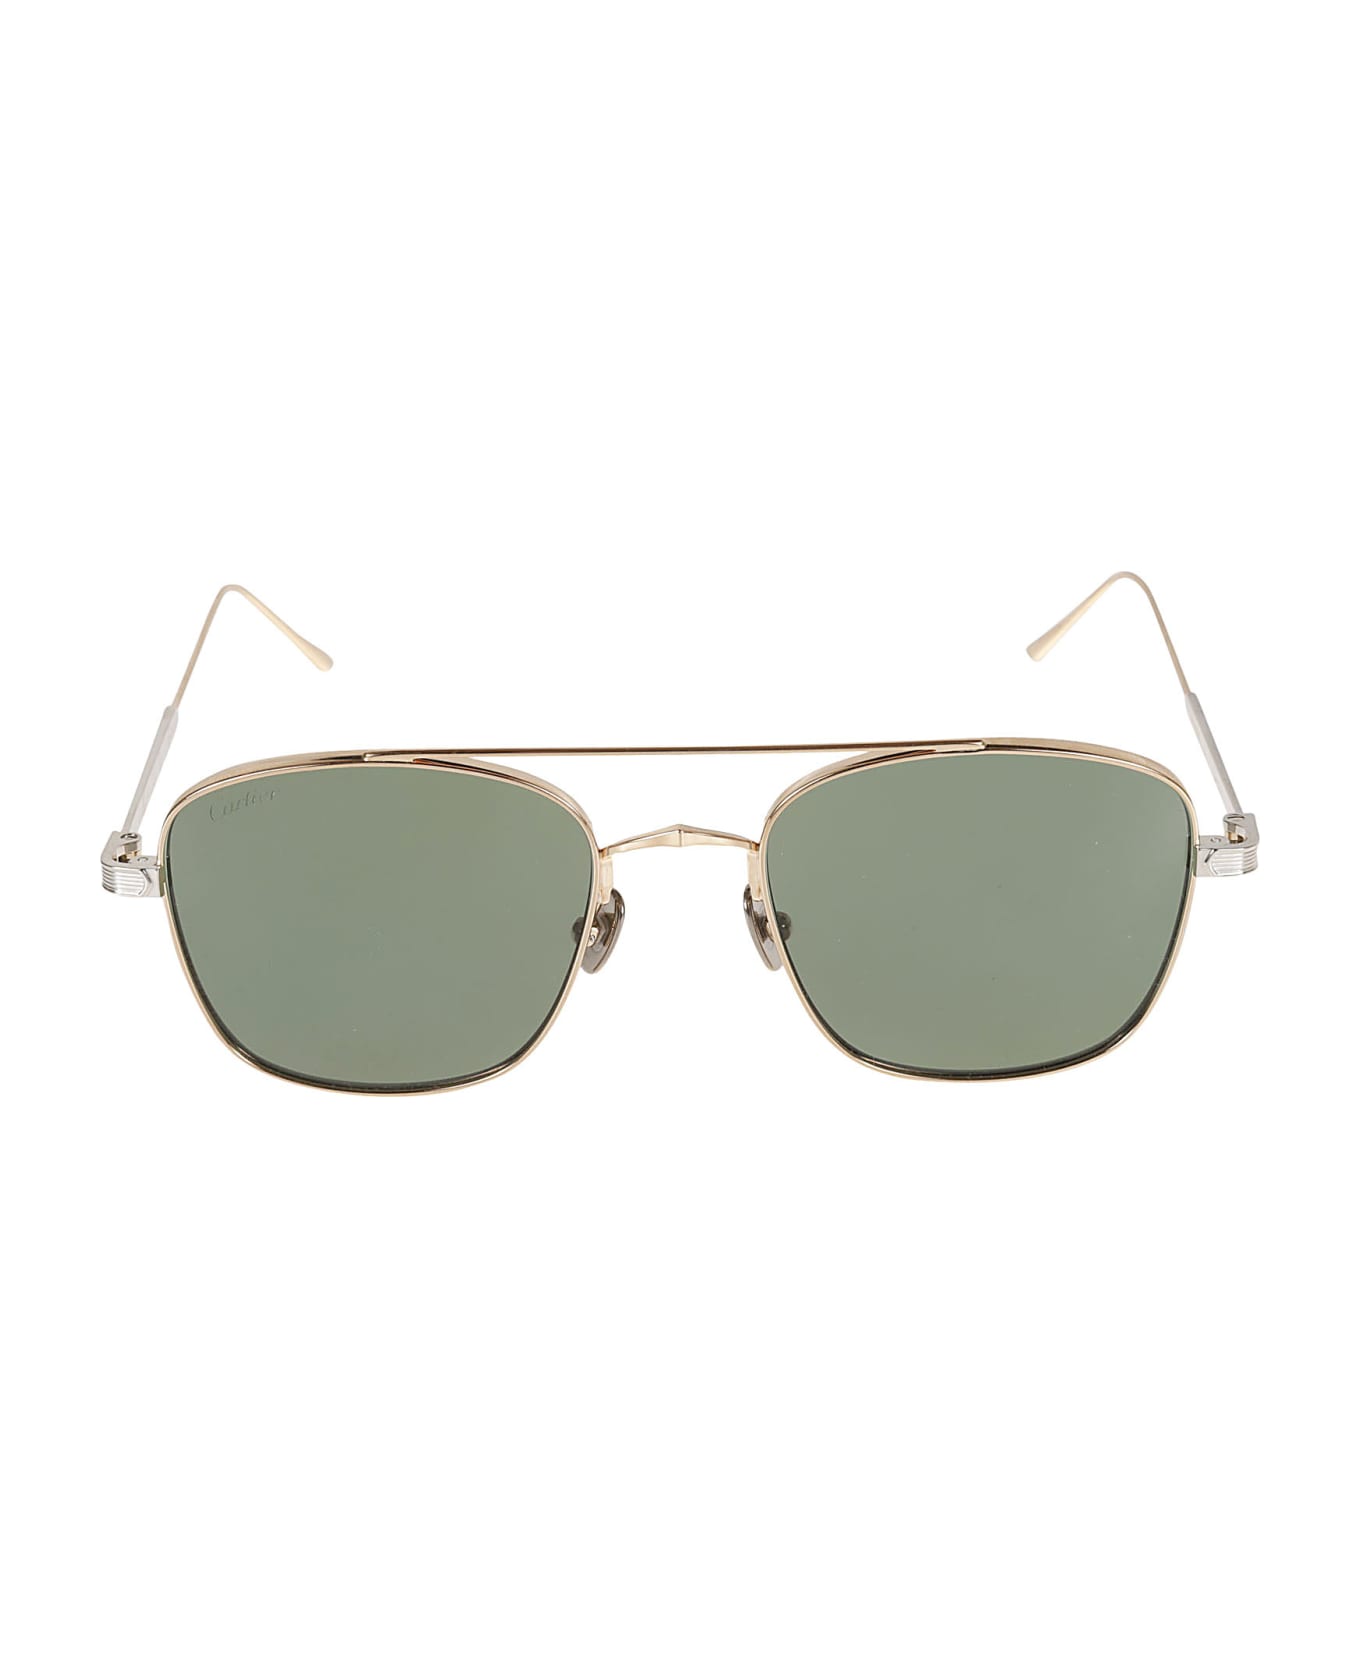 Cartier Eyewear Aviator Square Sunglasses - Silver/Green サングラス